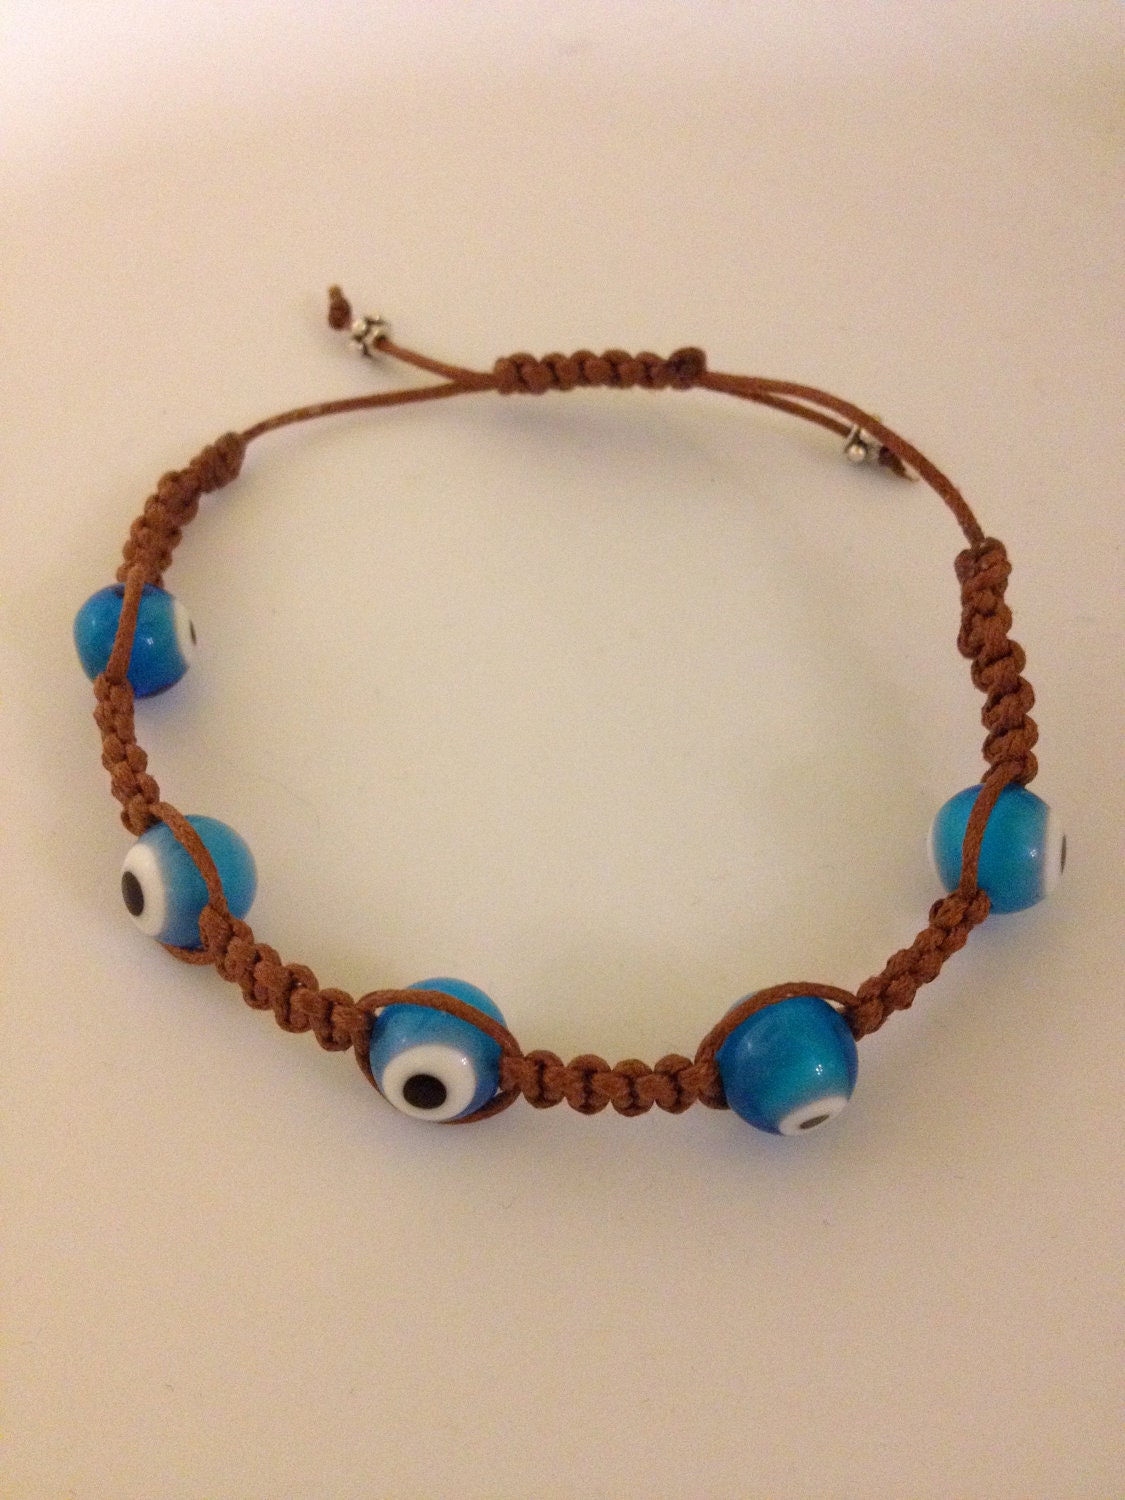 The Blue and Brown Evil Eye Bracelet